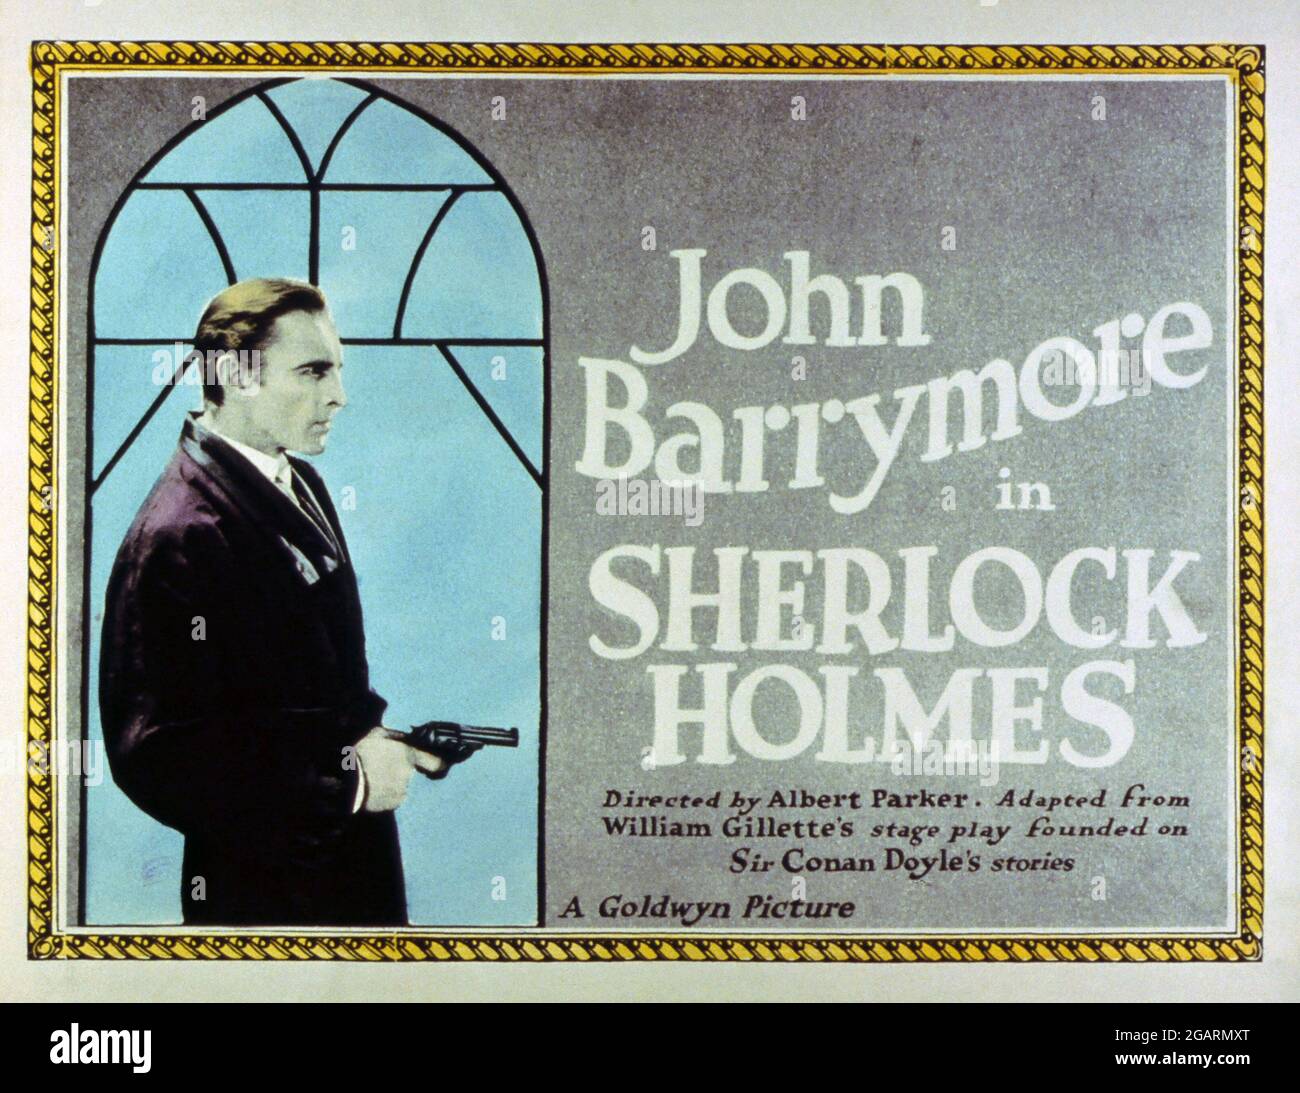 JOHN BARRYMORE in SHERLOCK HOLMES (1922), directed by ALBERT PARKER. Credit: GOLDWYN PICTURES / Album Stock Photo